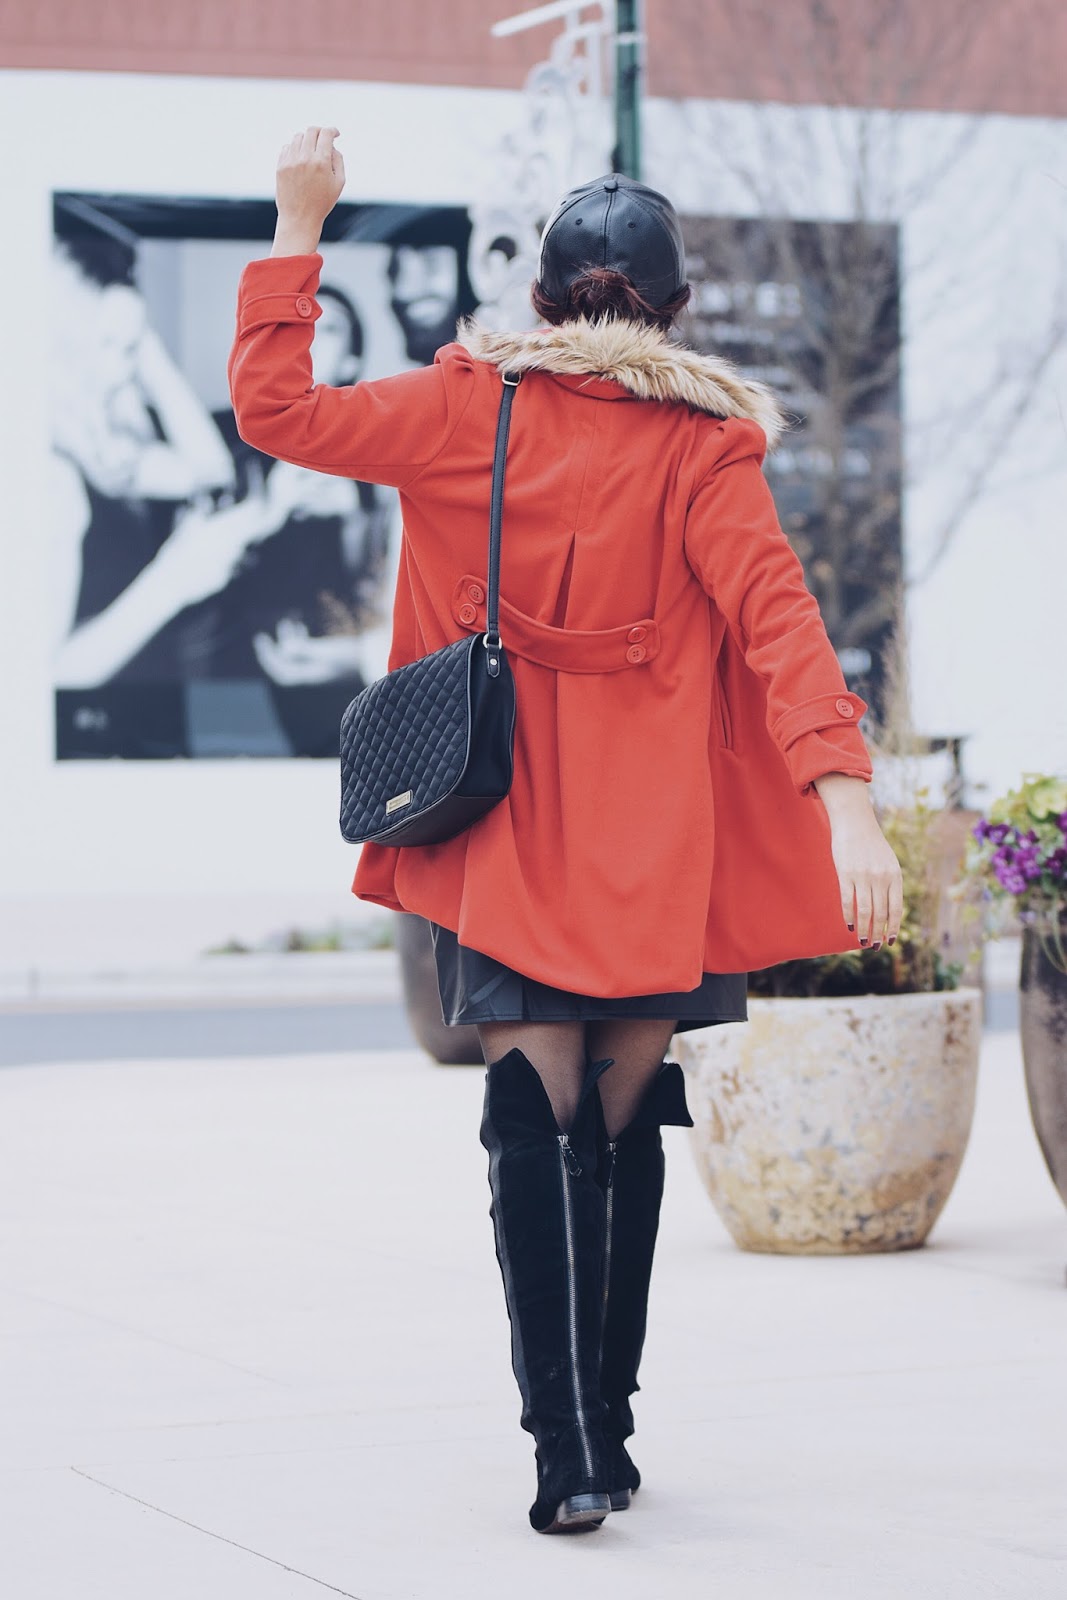 Styling a red coat by mariestilo- Wearing:  Red Coat: LightInTheBox  Mini Skirt: Choies